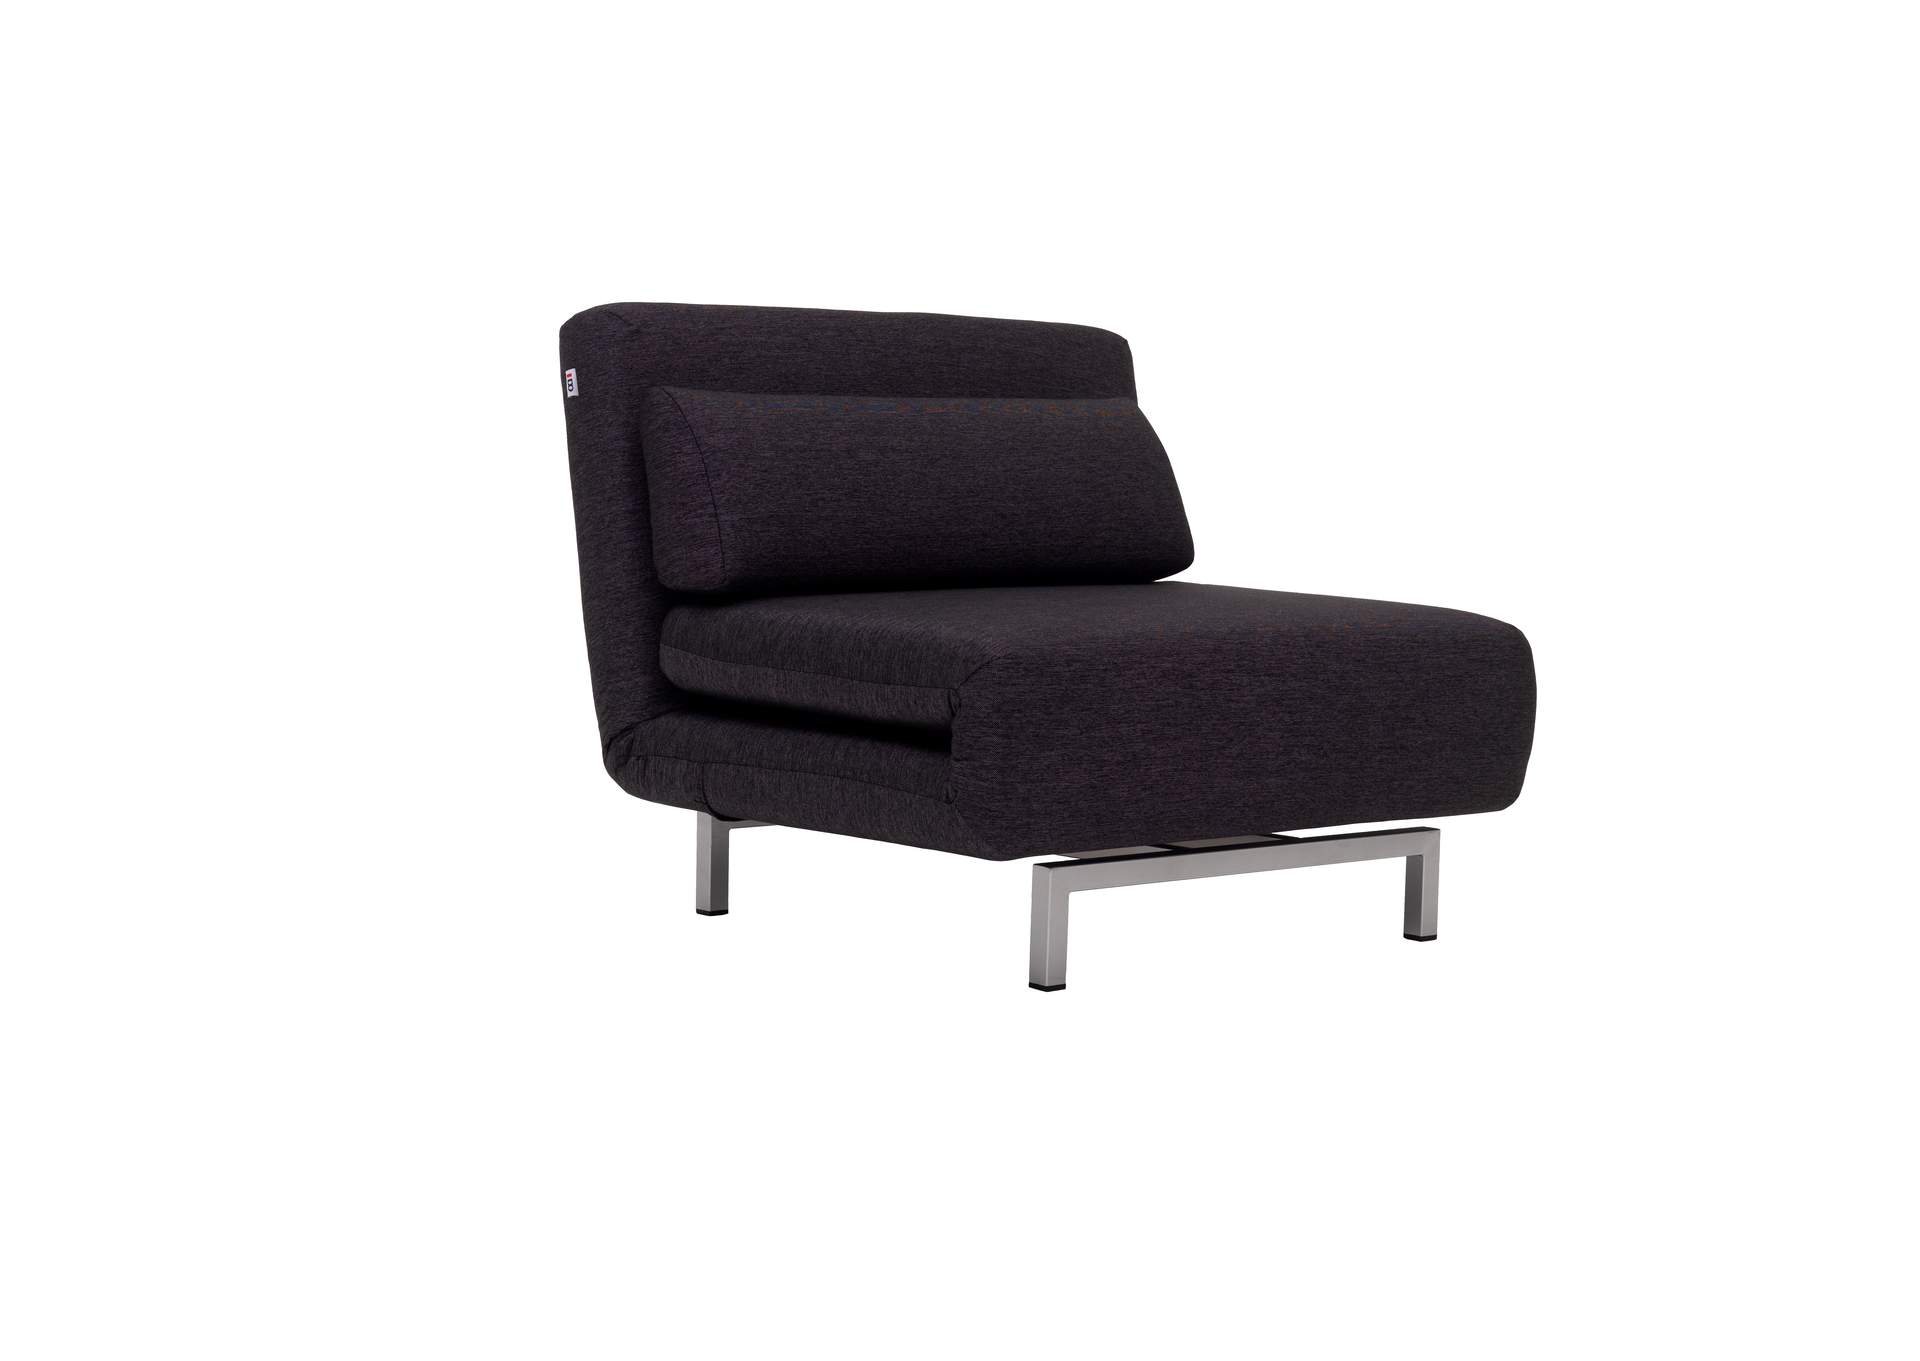 Premium Chair Bed LK06-1 in Black Fabric,J&M Furniture